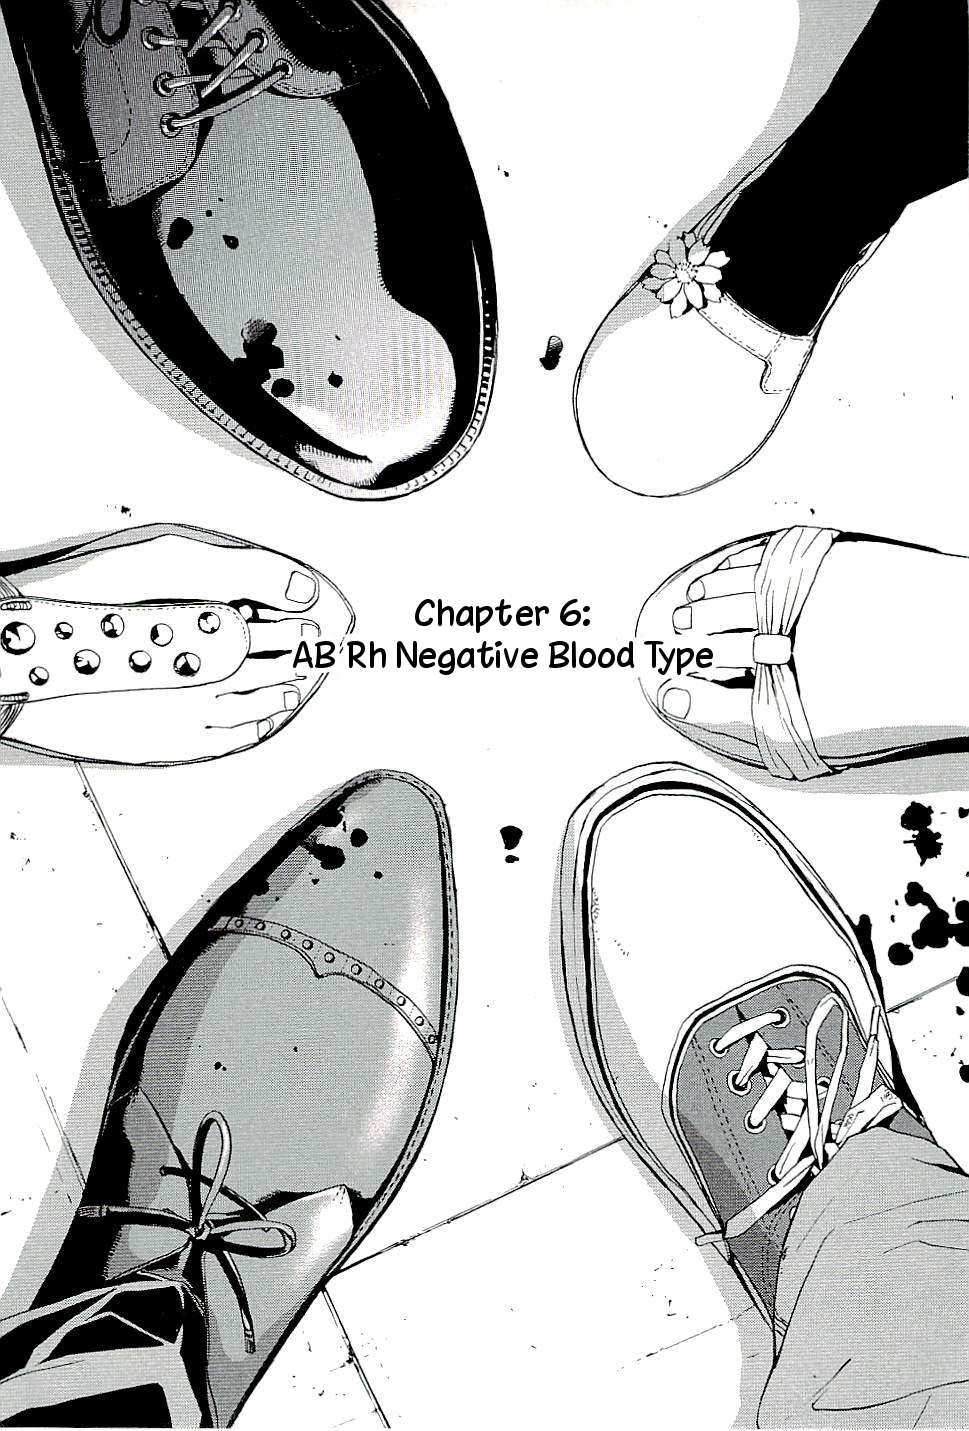 The Quiz Vol. 1 Ch. 6 AB Rh Negative Blood Type